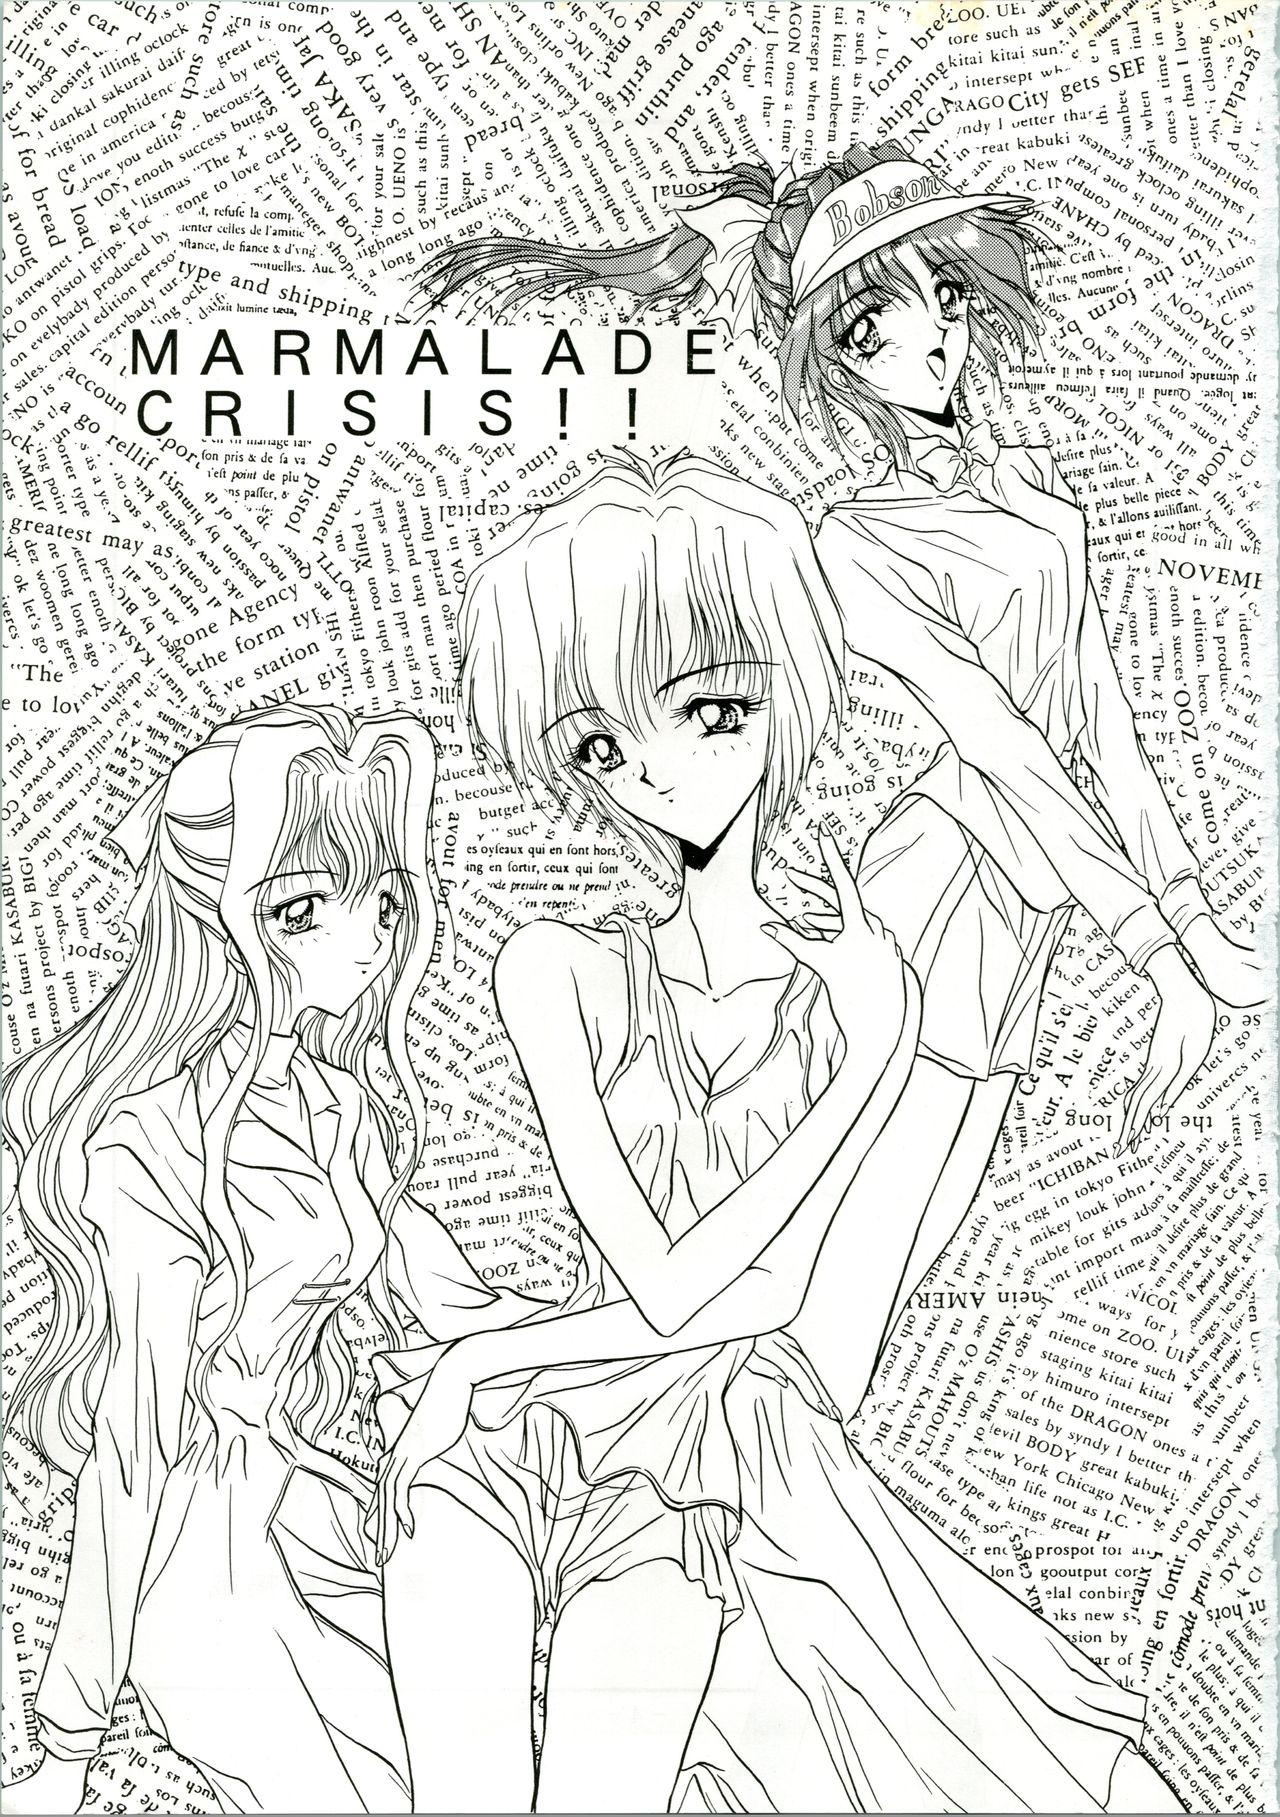 Bed MARMARADE CRSIS!! - Marmalade boy Old Man - Page 3